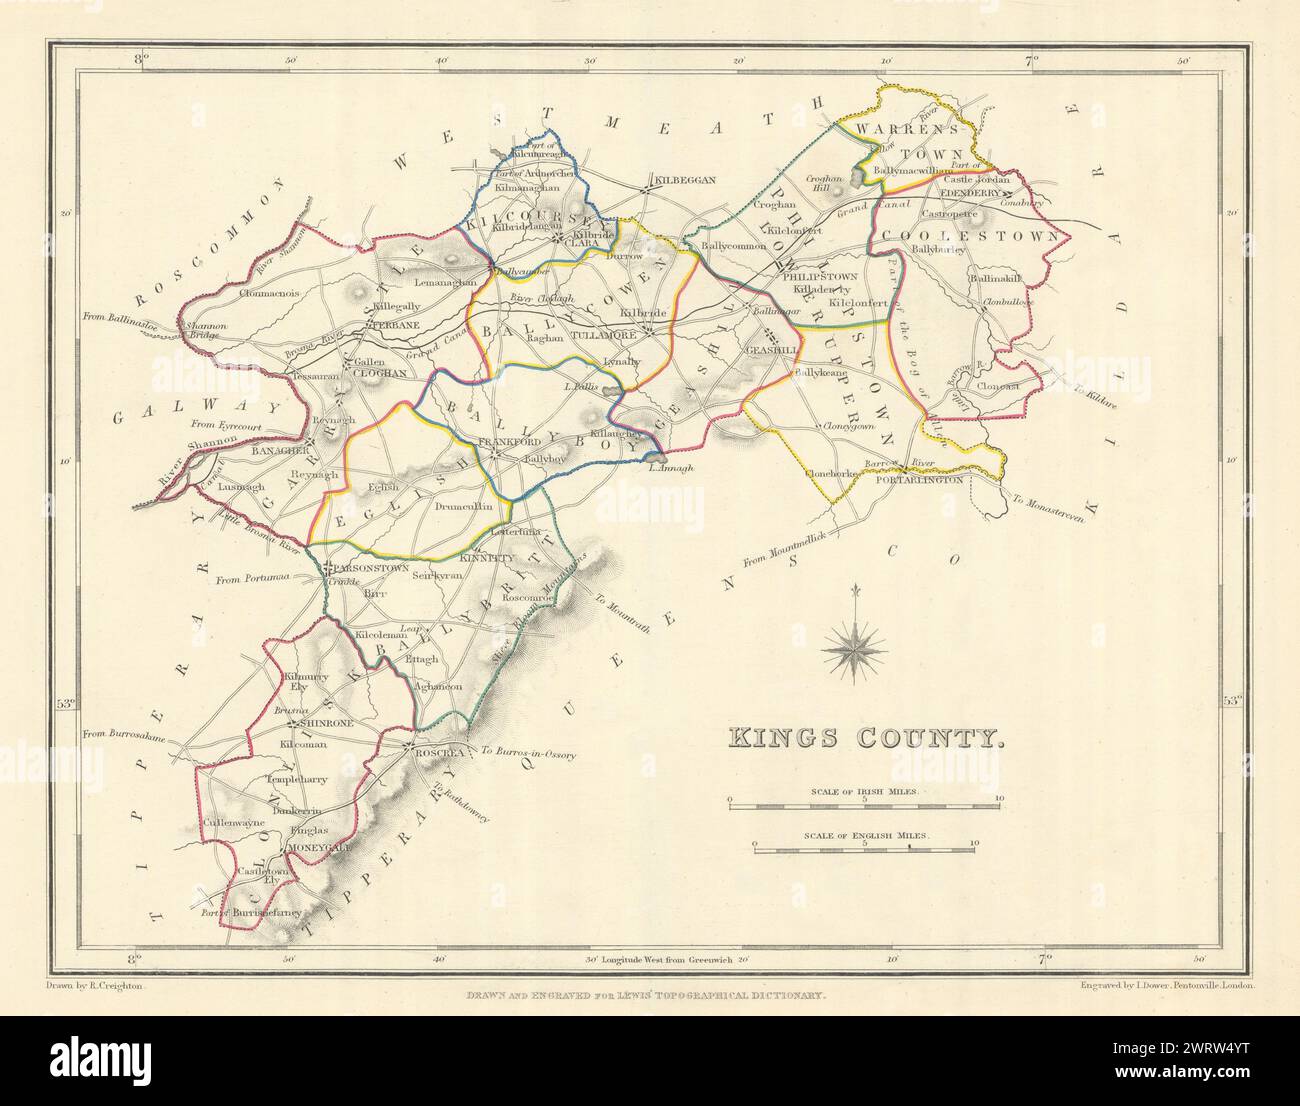 KINGS COUNTY (OFFALY) antica mappa di LEWIS. CREIGHTON E DOWER. Irlanda 1850 Foto Stock